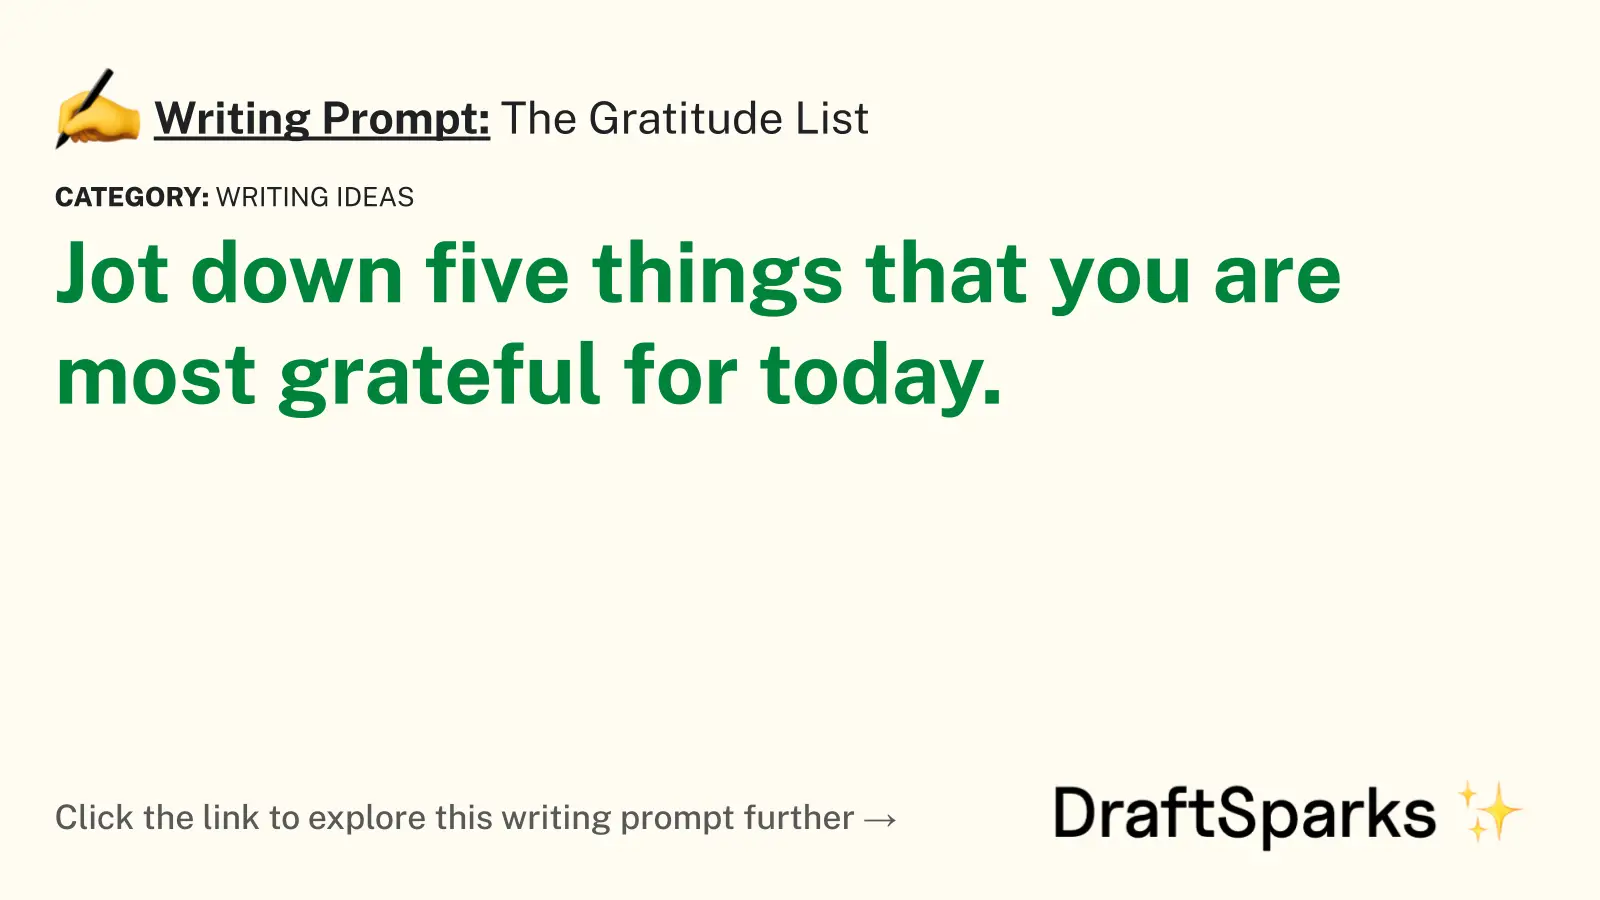 The Gratitude List